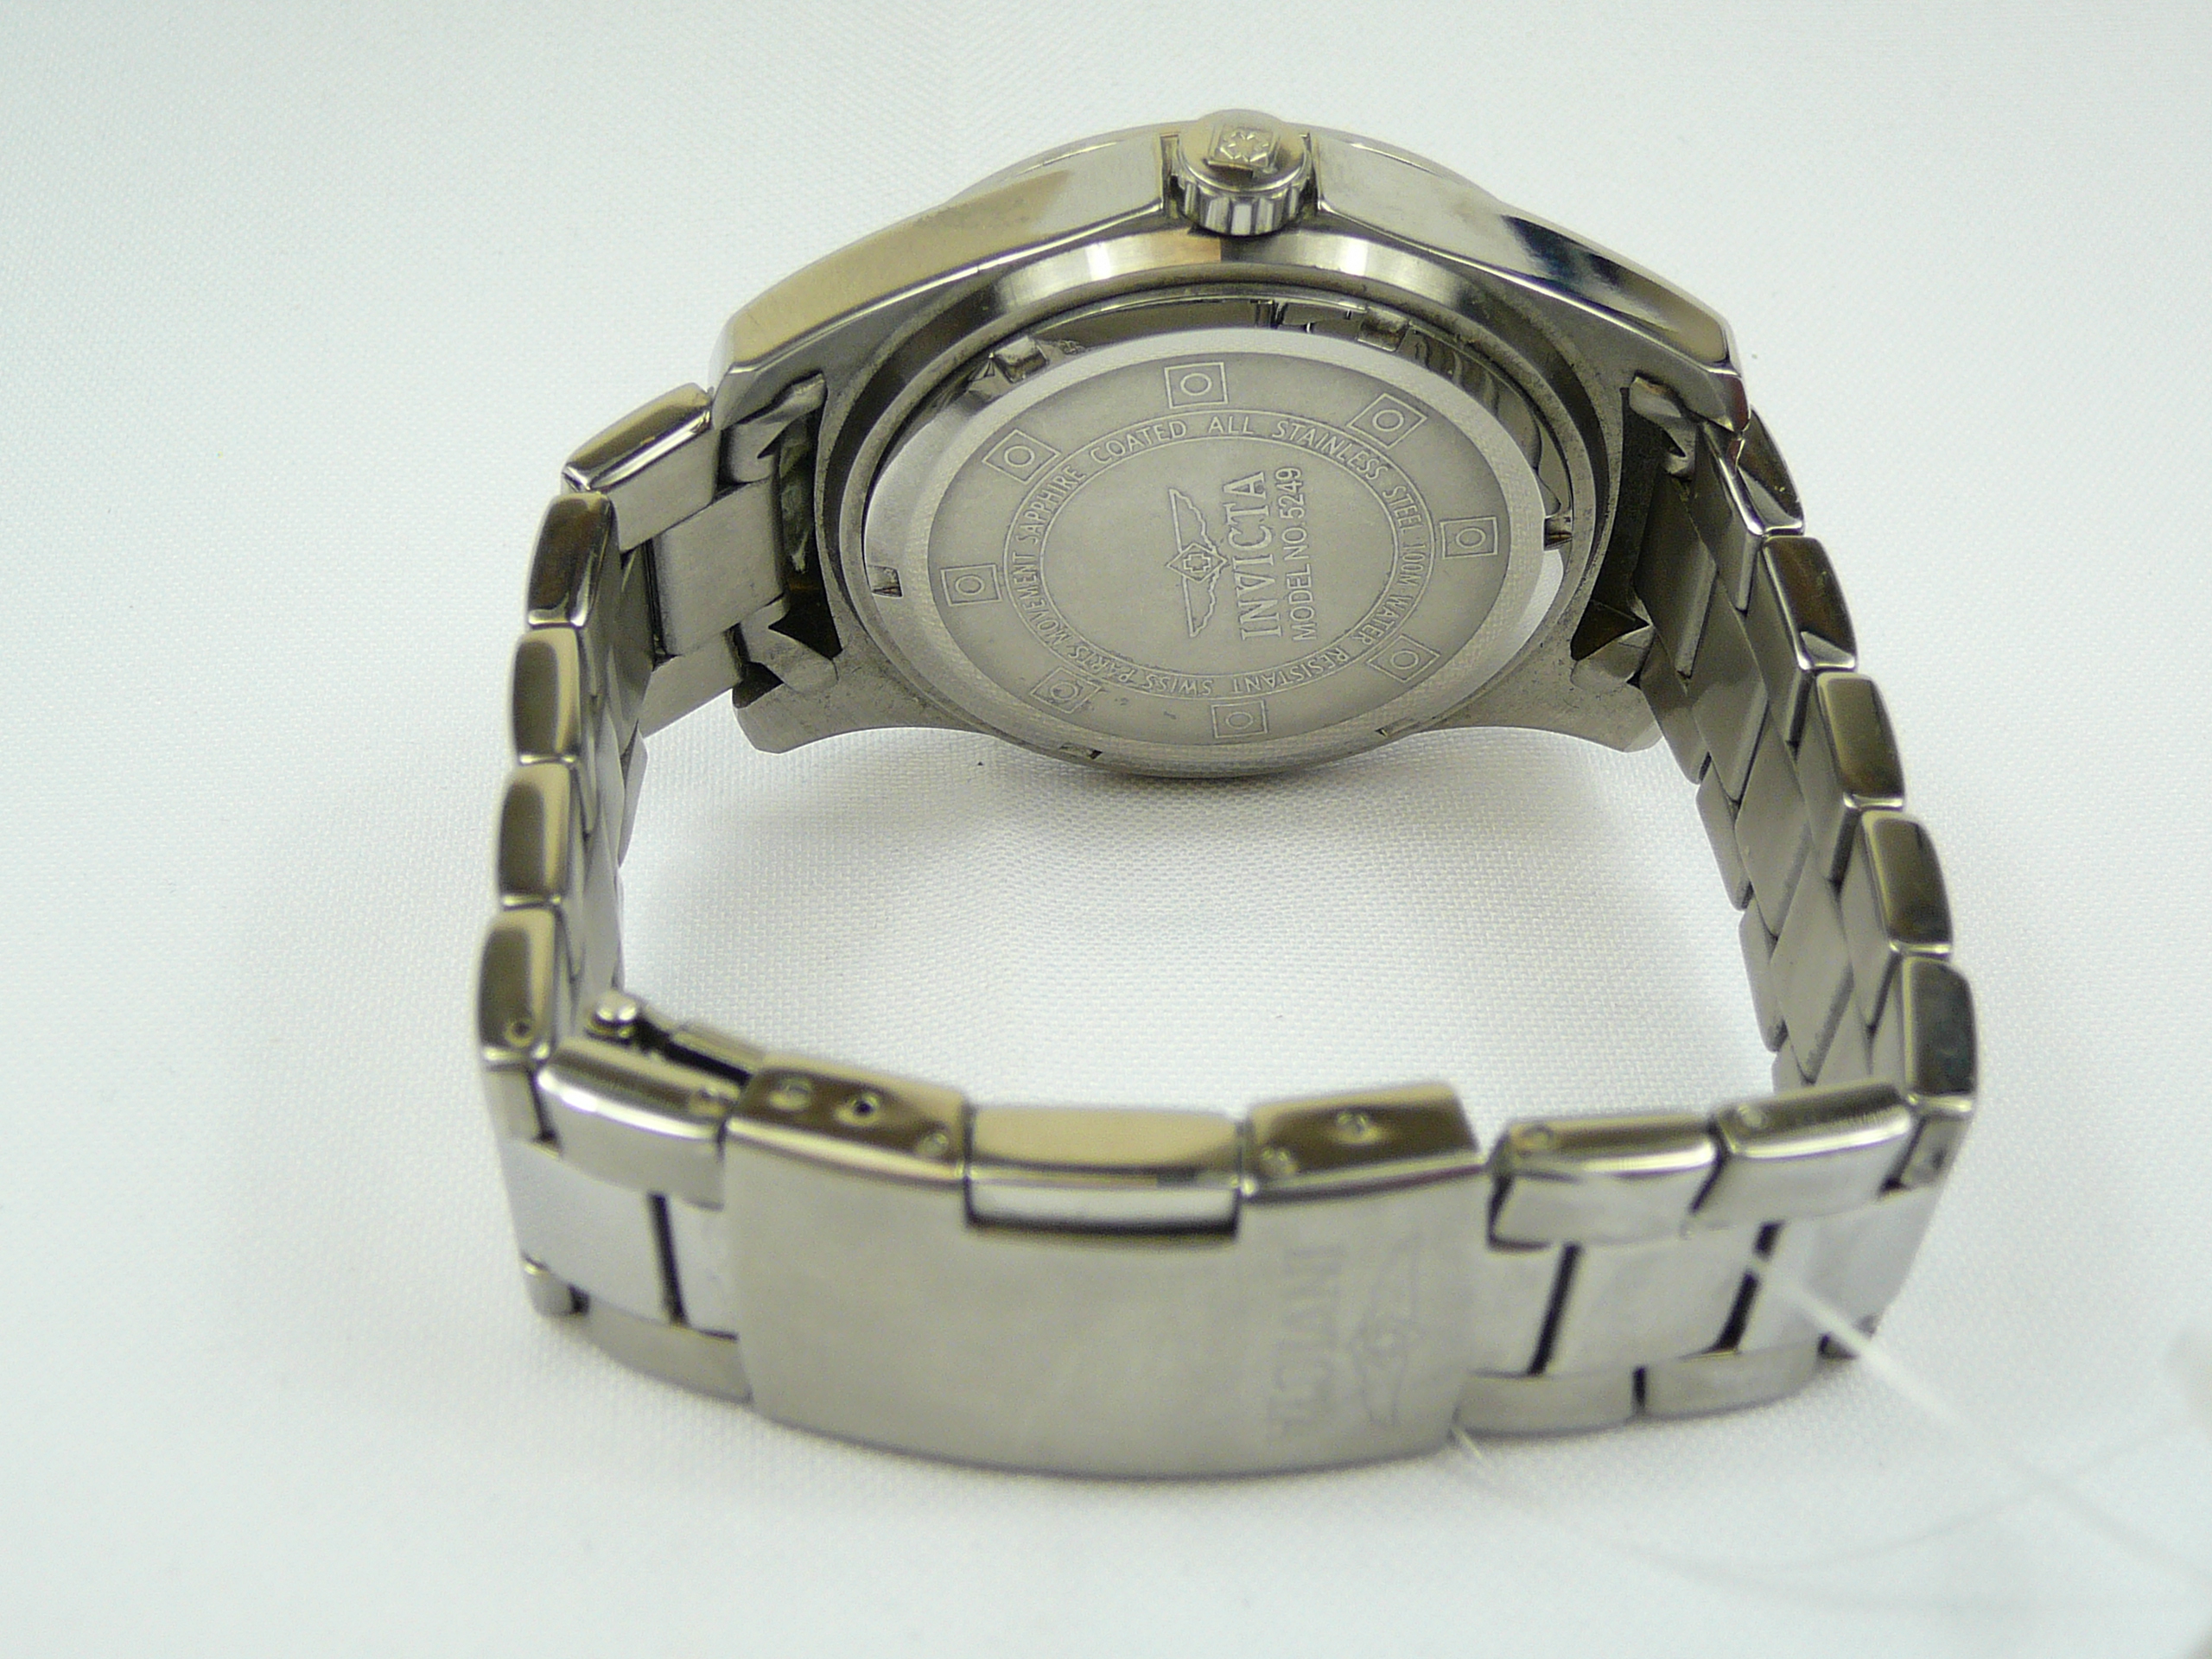 Gents Invicta wrist watch - Image 3 of 3